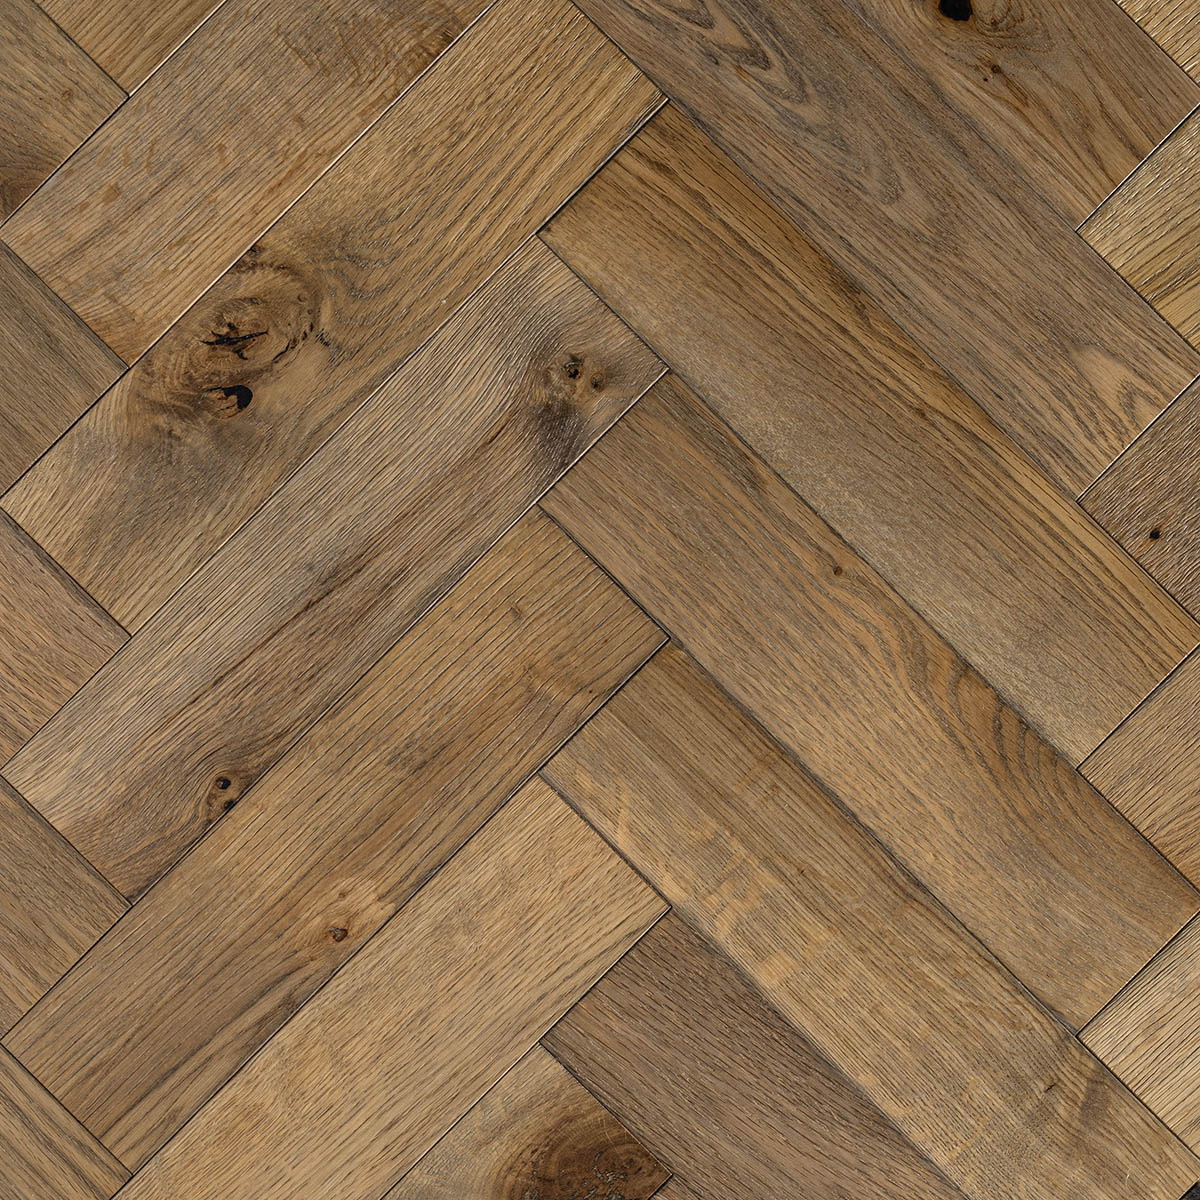 Henley Close - Rustic-Grade Oak Herringbone Floor 280mm x 70mm